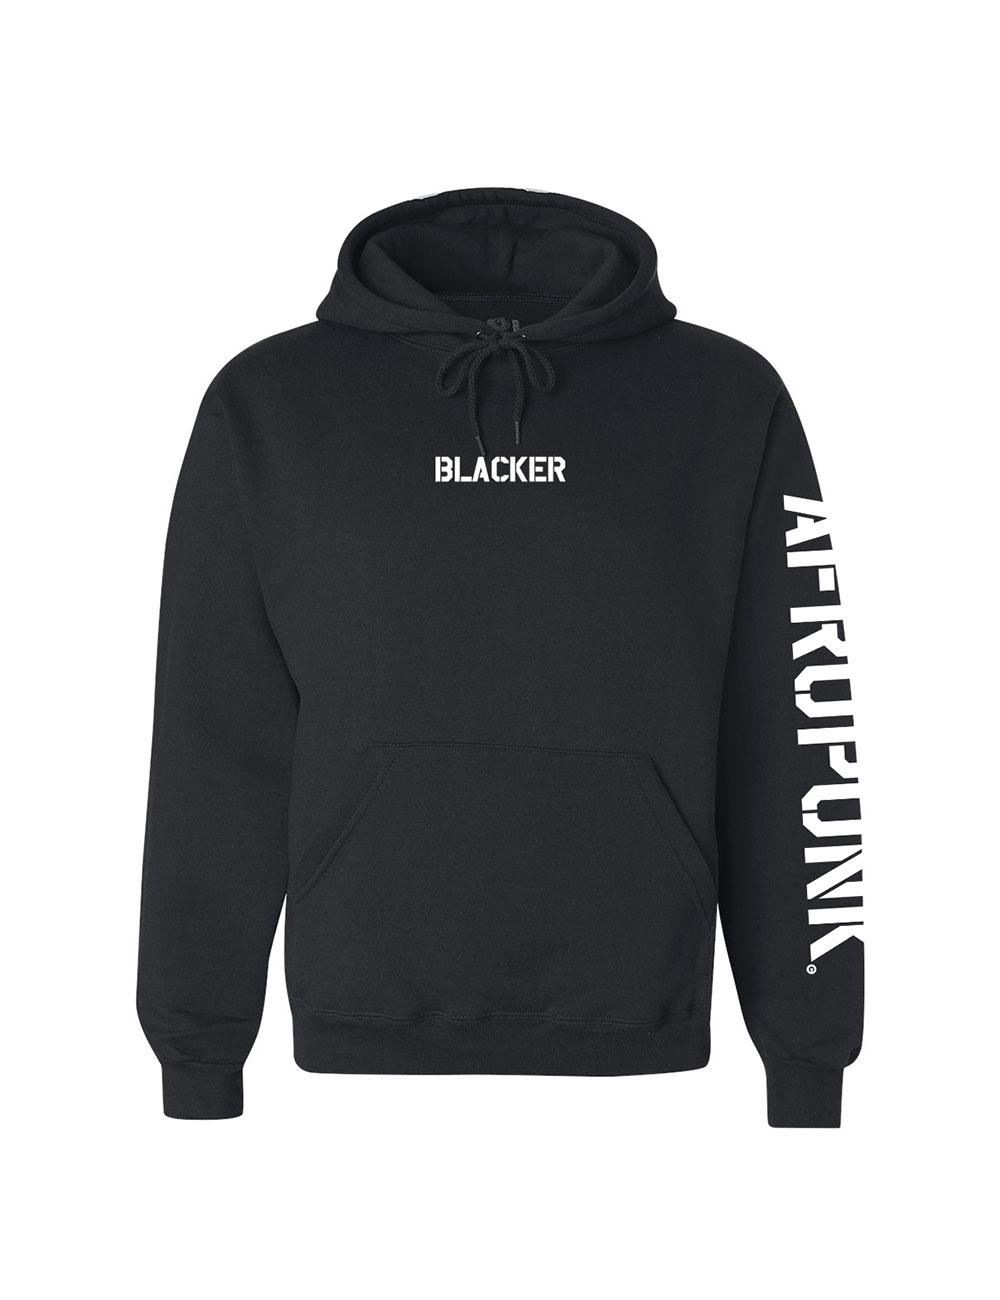 Afropunk - Official Merch Shop - Sweatshirts - Blacker Hoodie